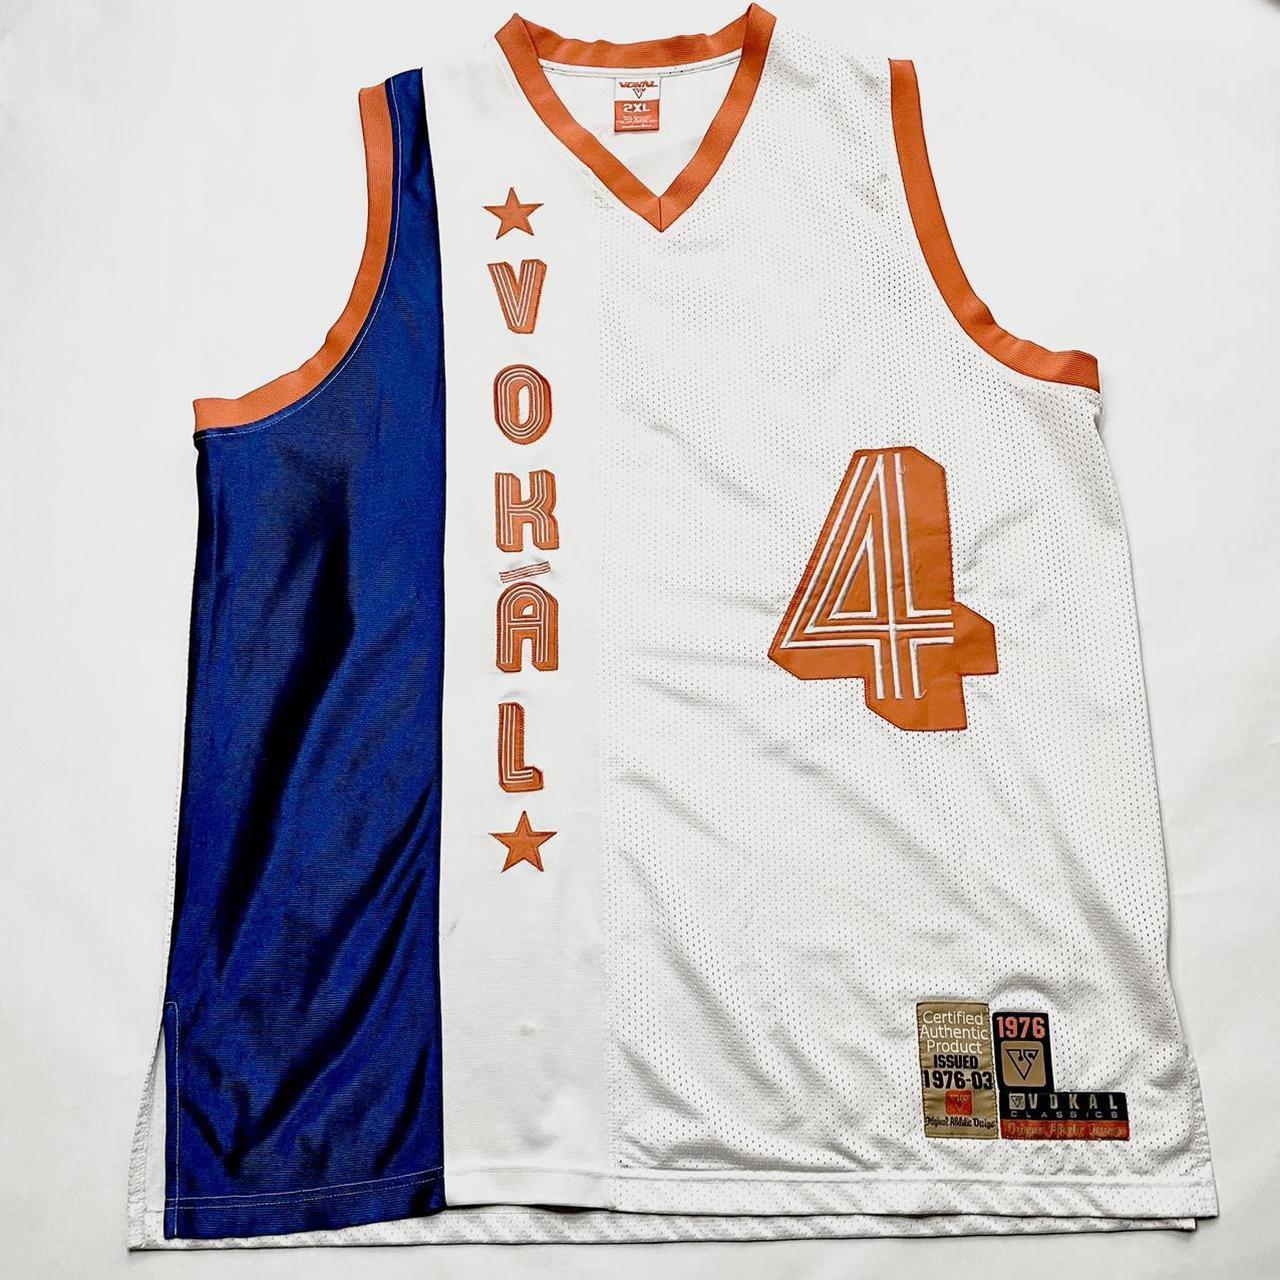 NBA Men's White and Orange Shirt (2)